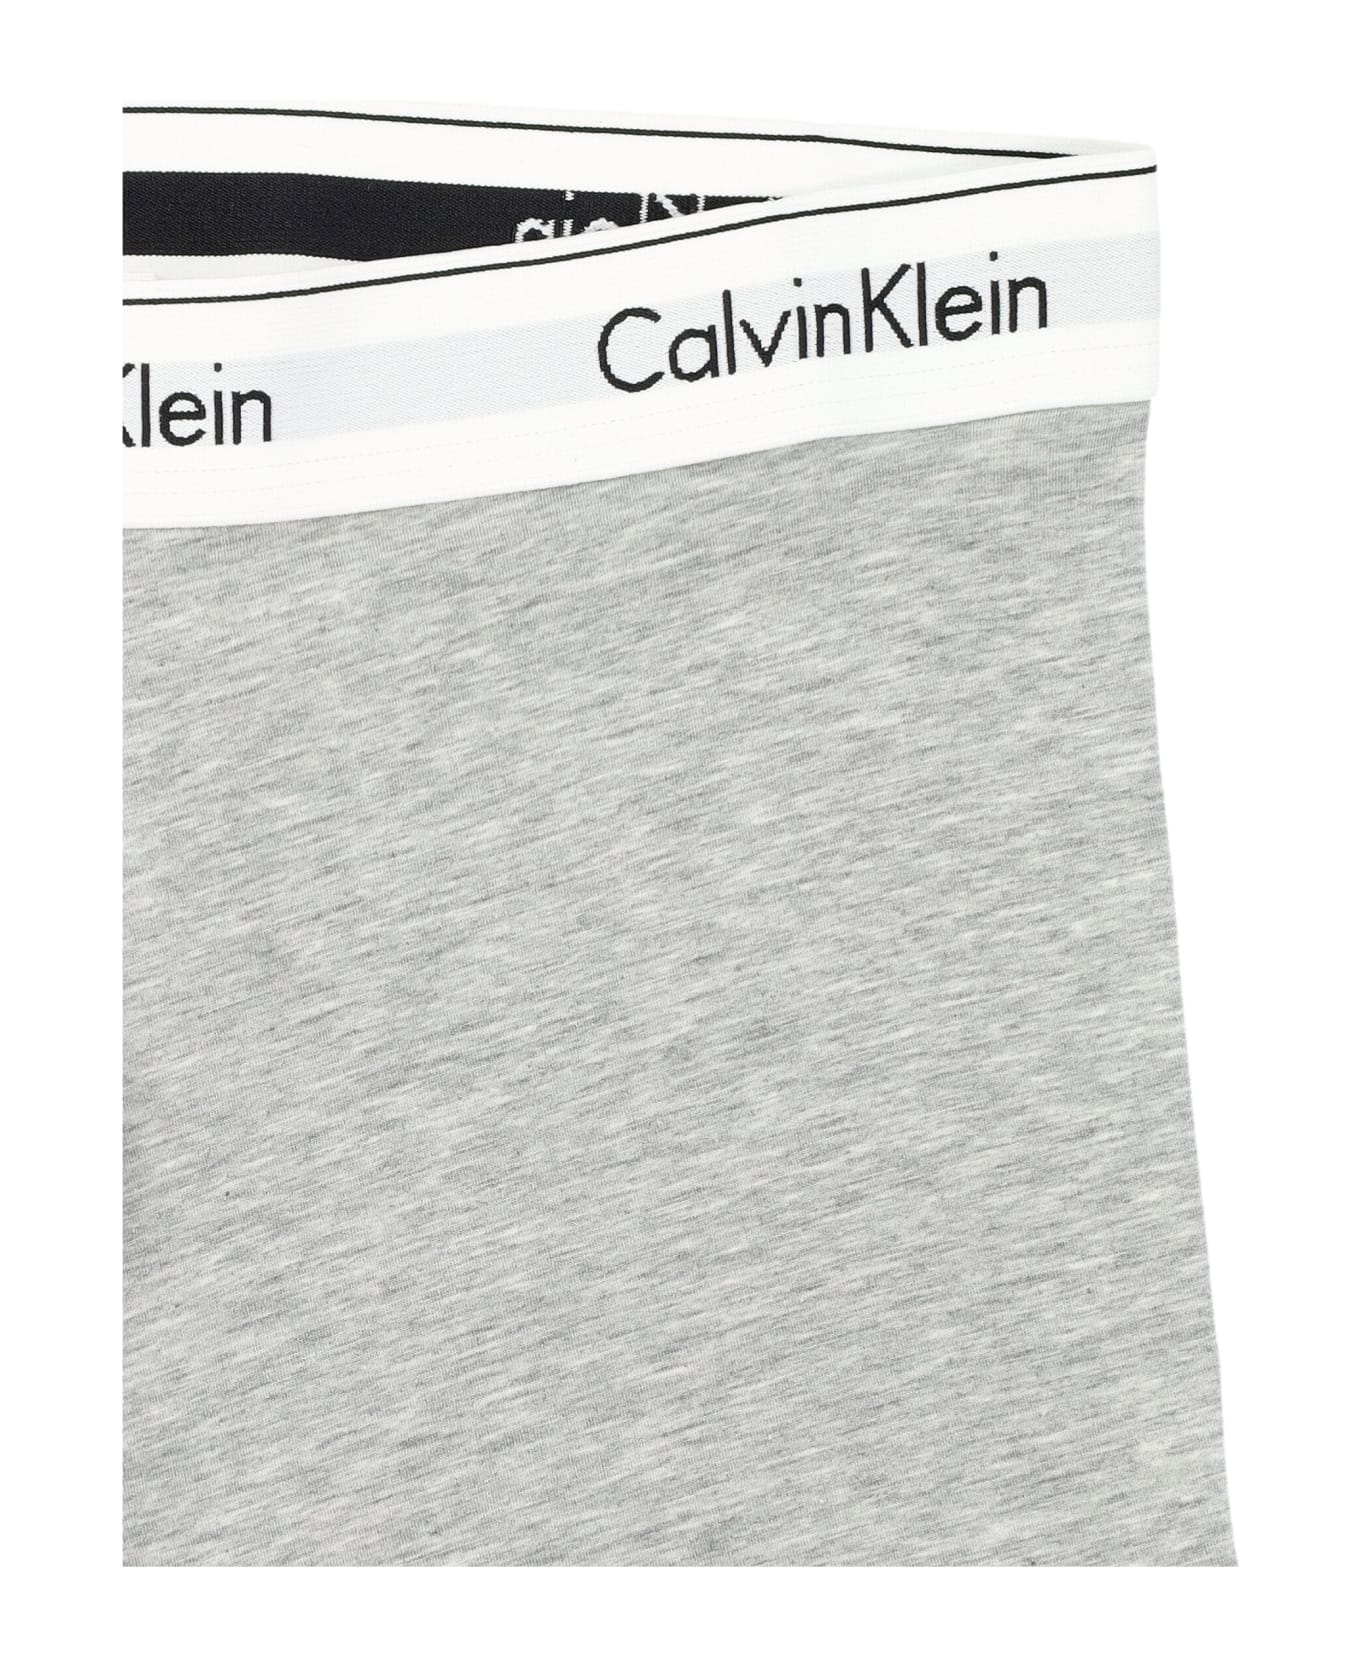 Calvin Klein Boxer Briefs - GRIGIO ショーツ